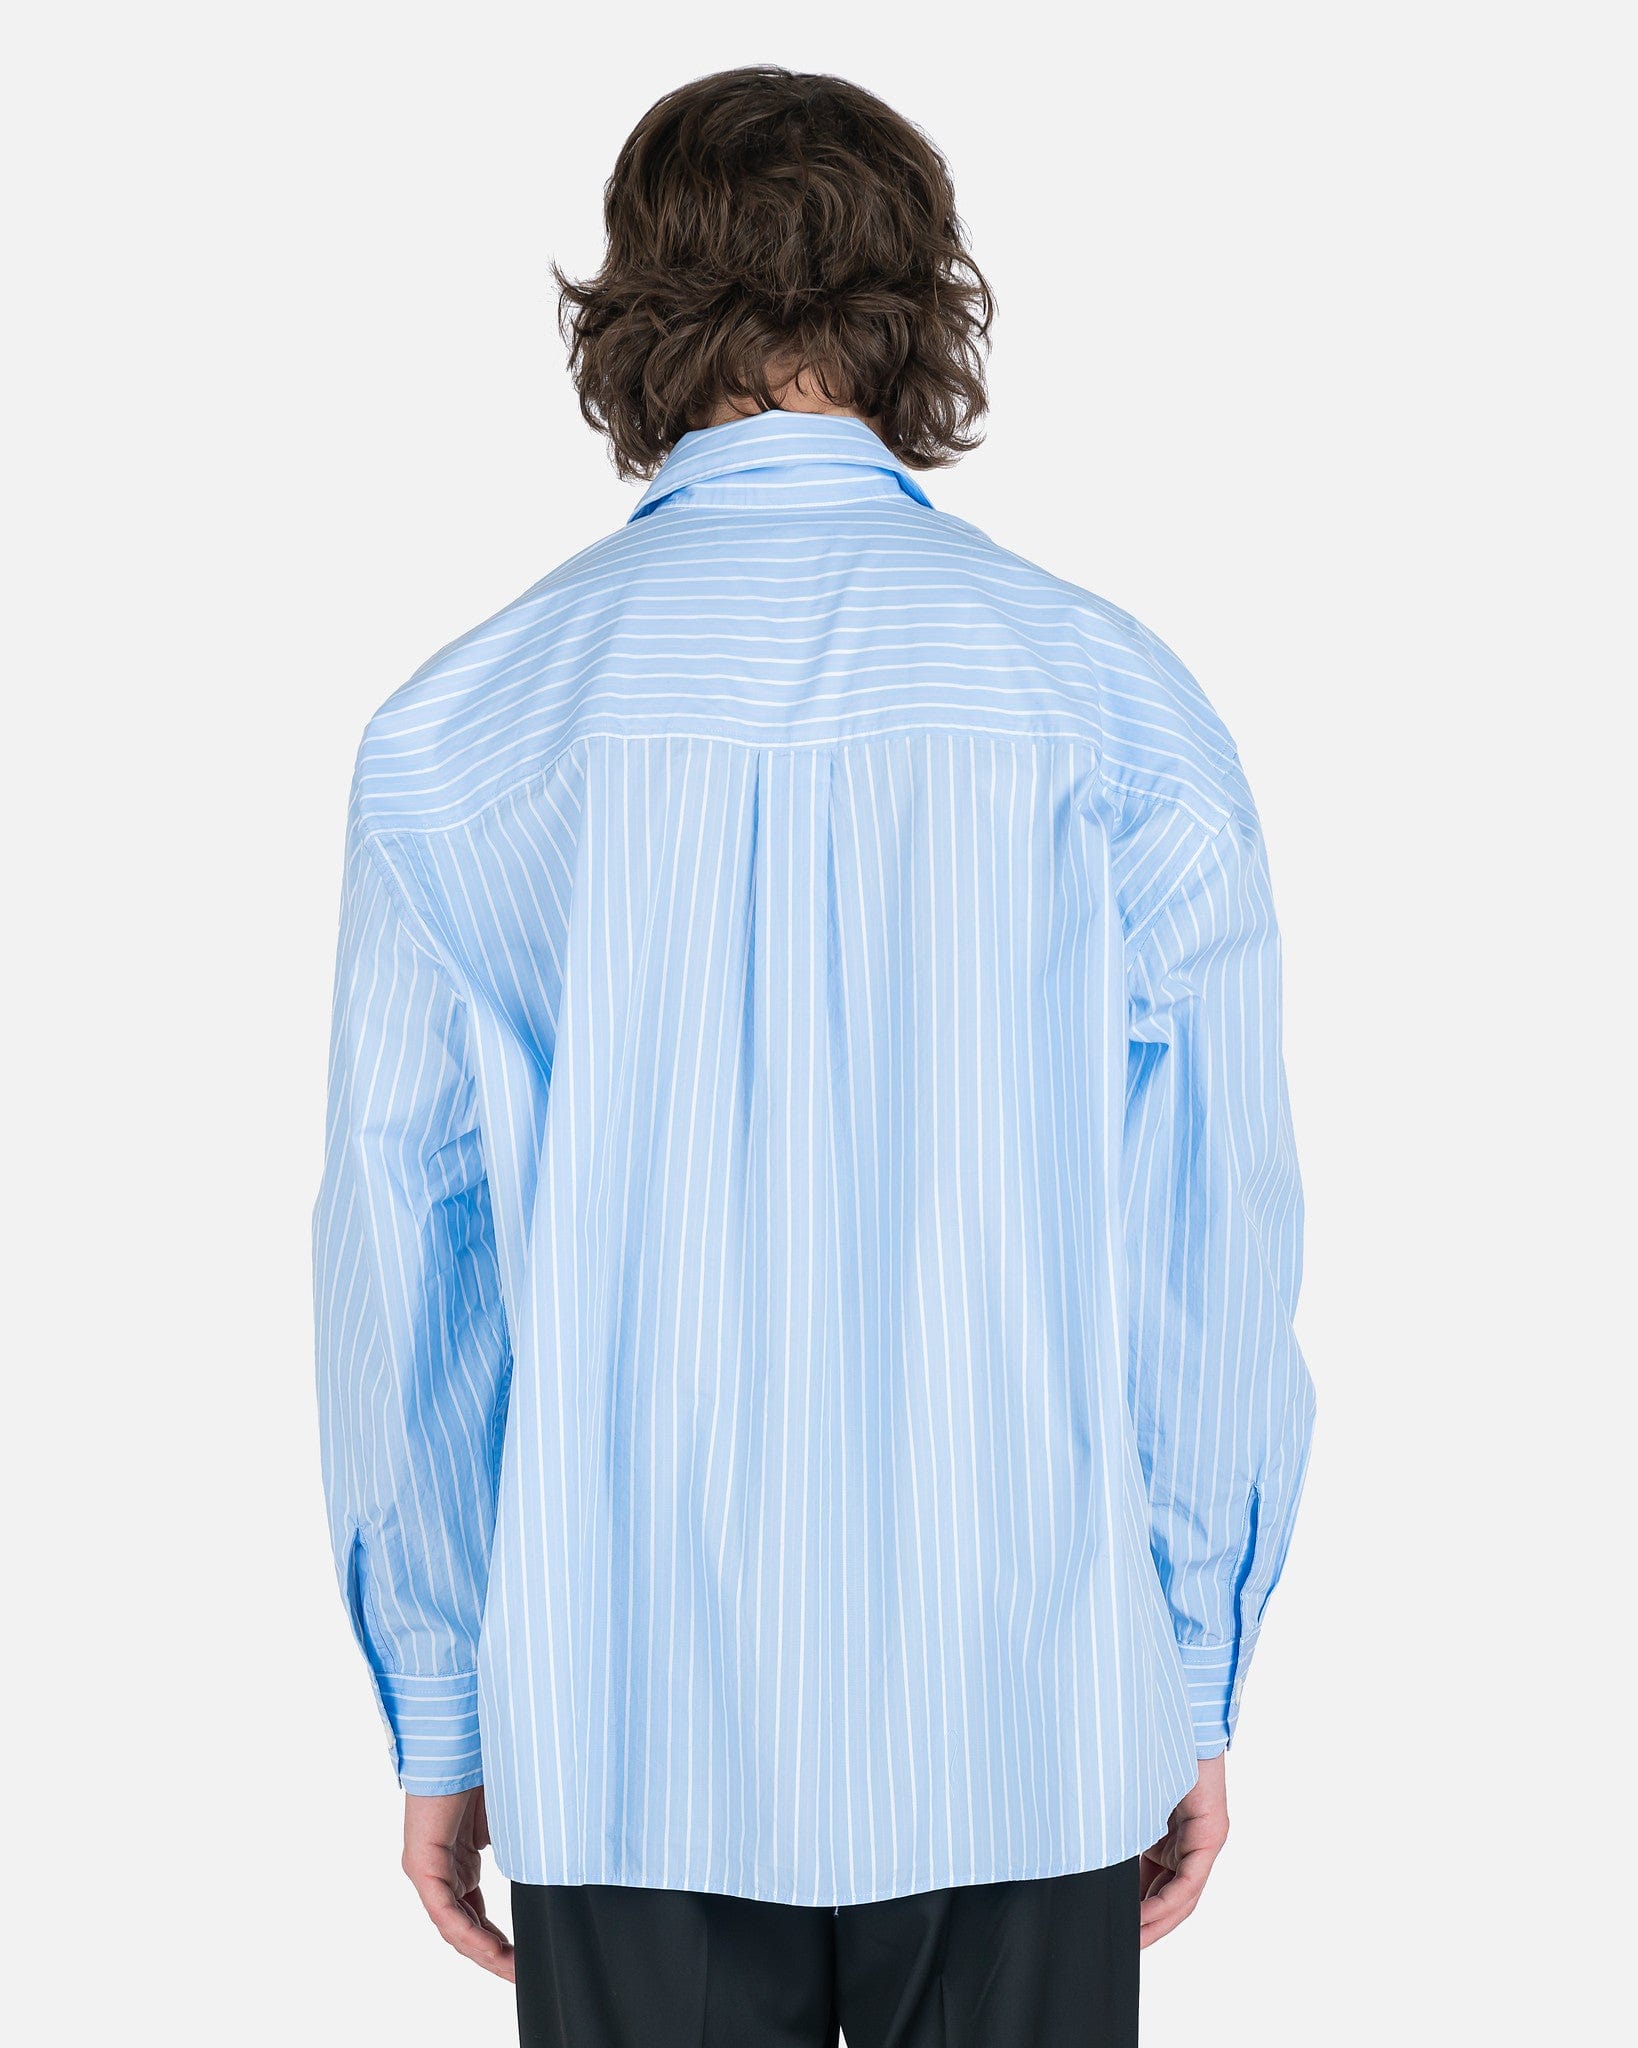 Borrowed Shirt in Blue/Rose Olden Stripe